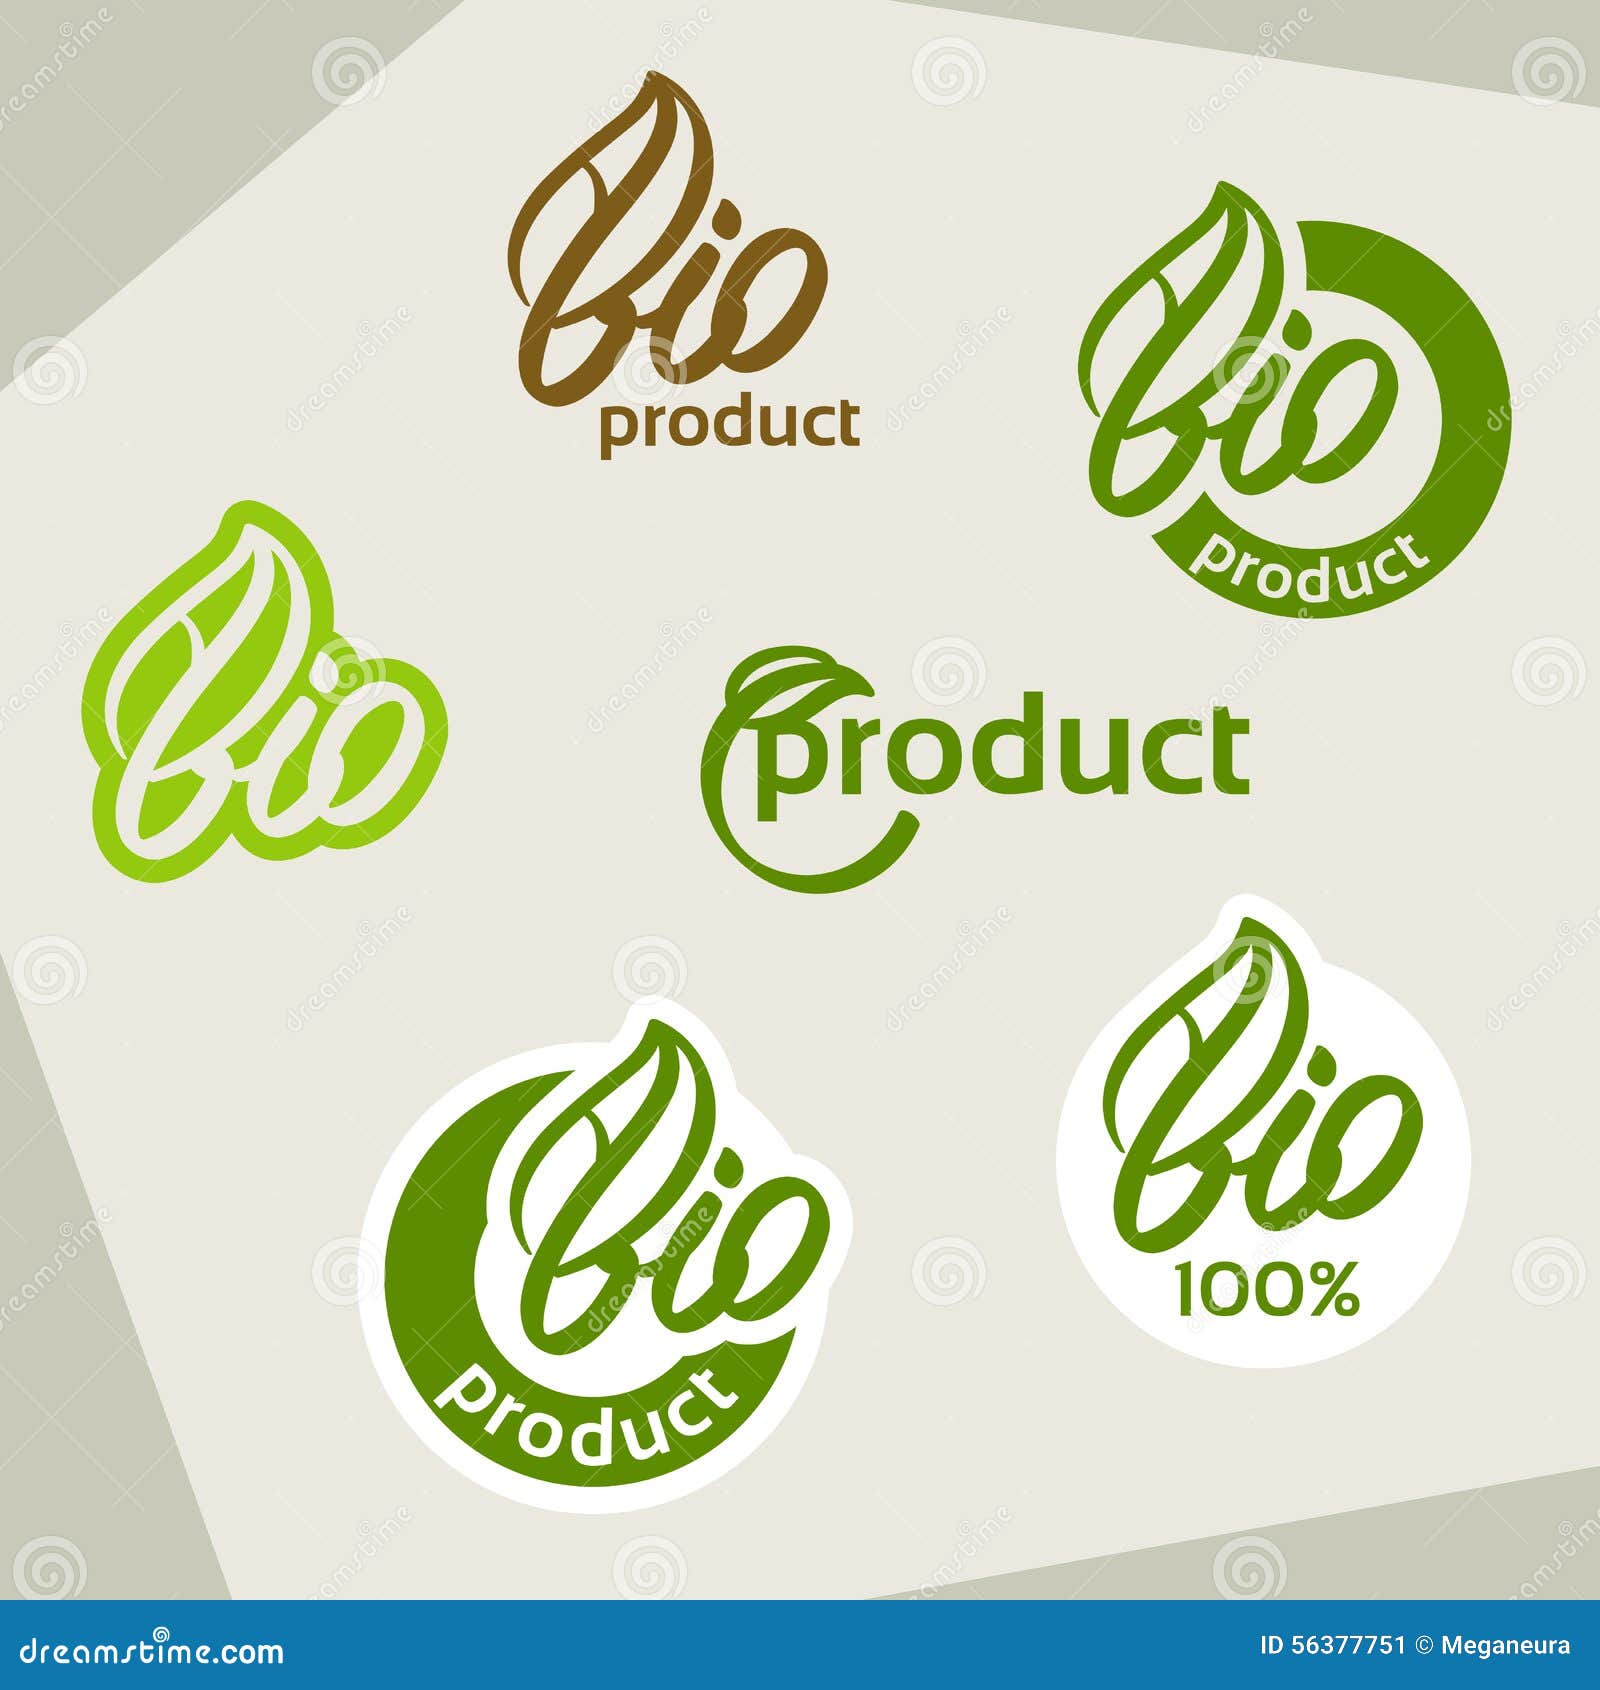 bio logo, eco label, natural product sign, organic icon set